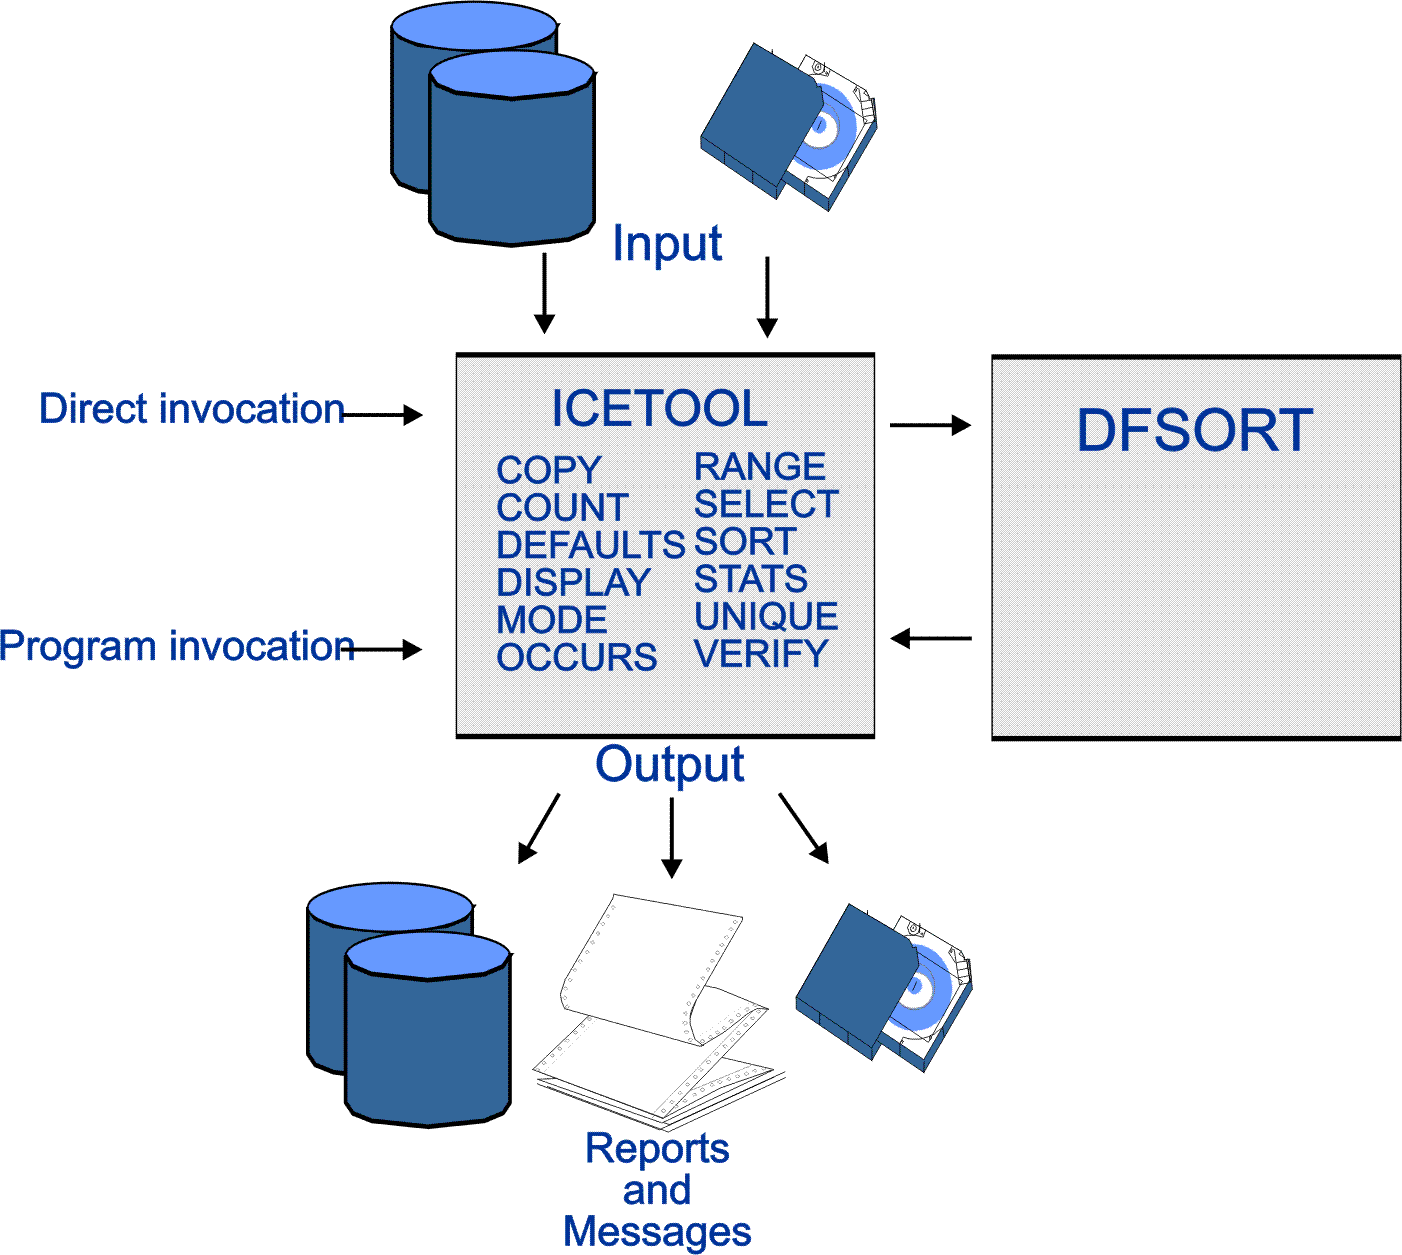 DFSORT's ICETOOL Utility